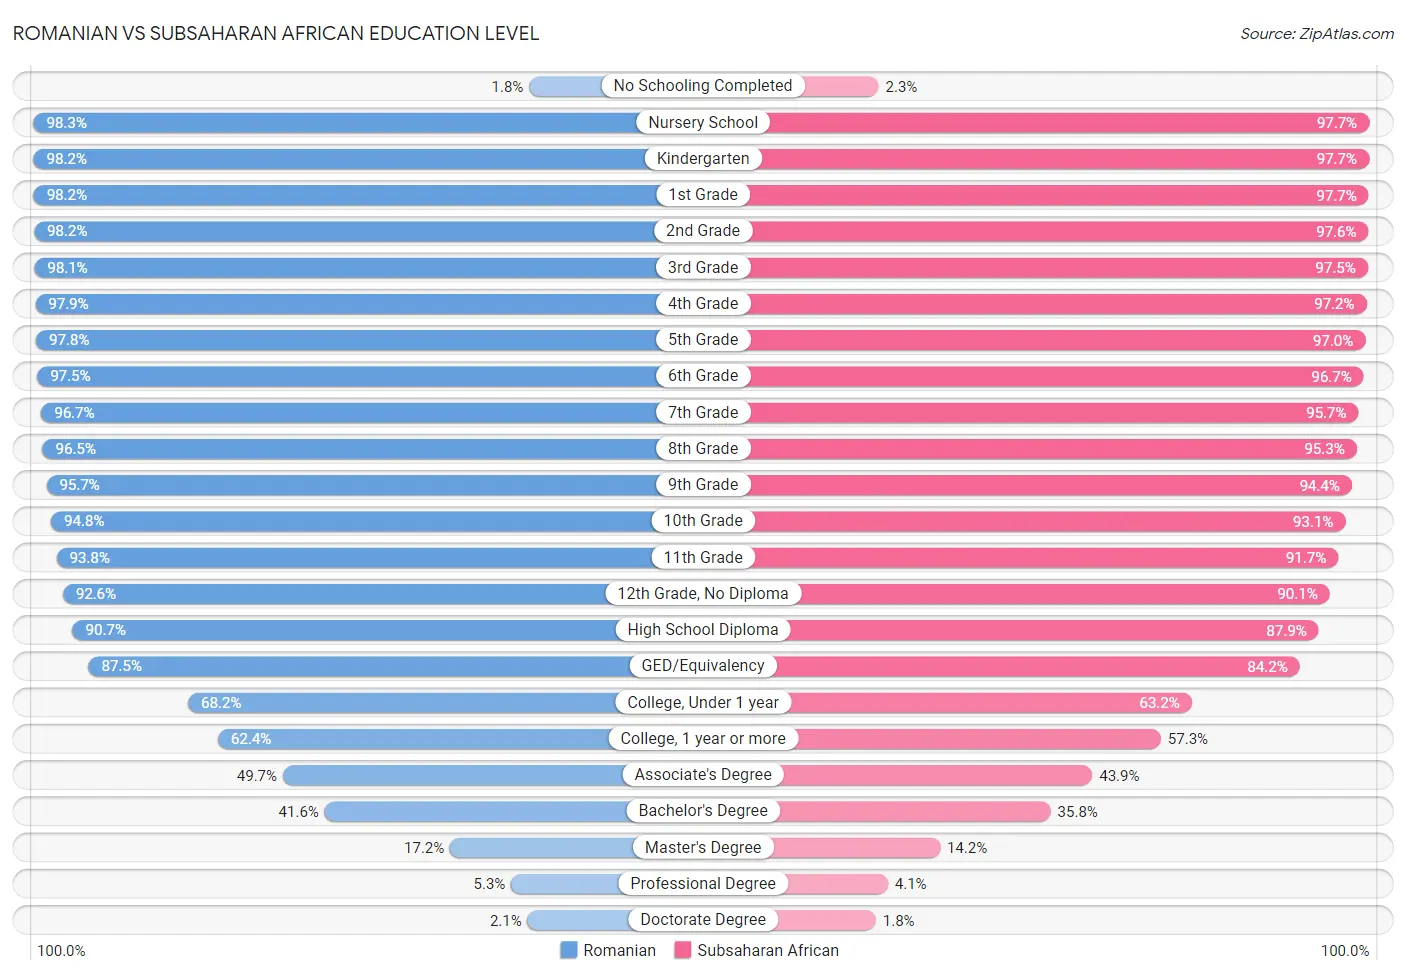 Romanian vs Subsaharan African Education Level